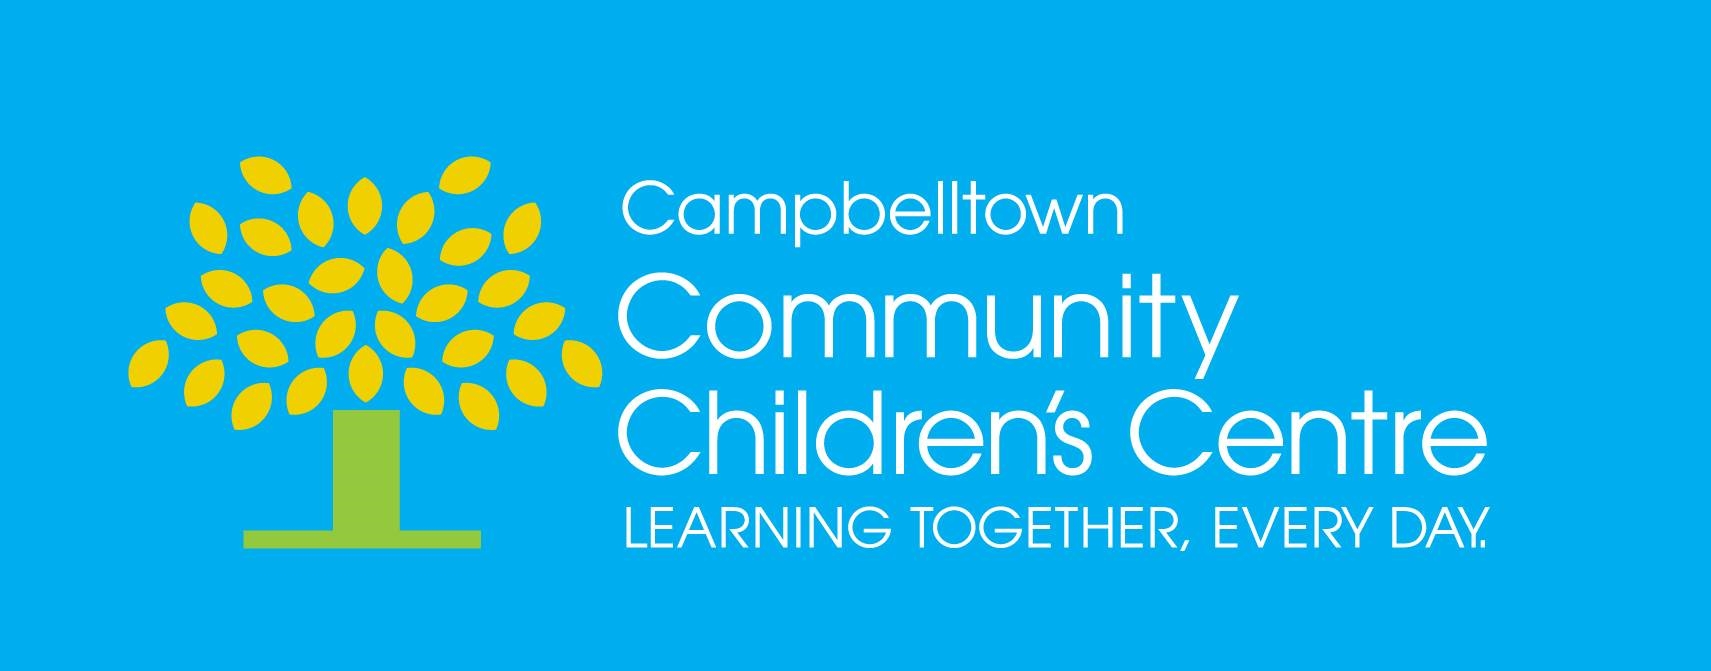 Campbelltown Community Children's Centre